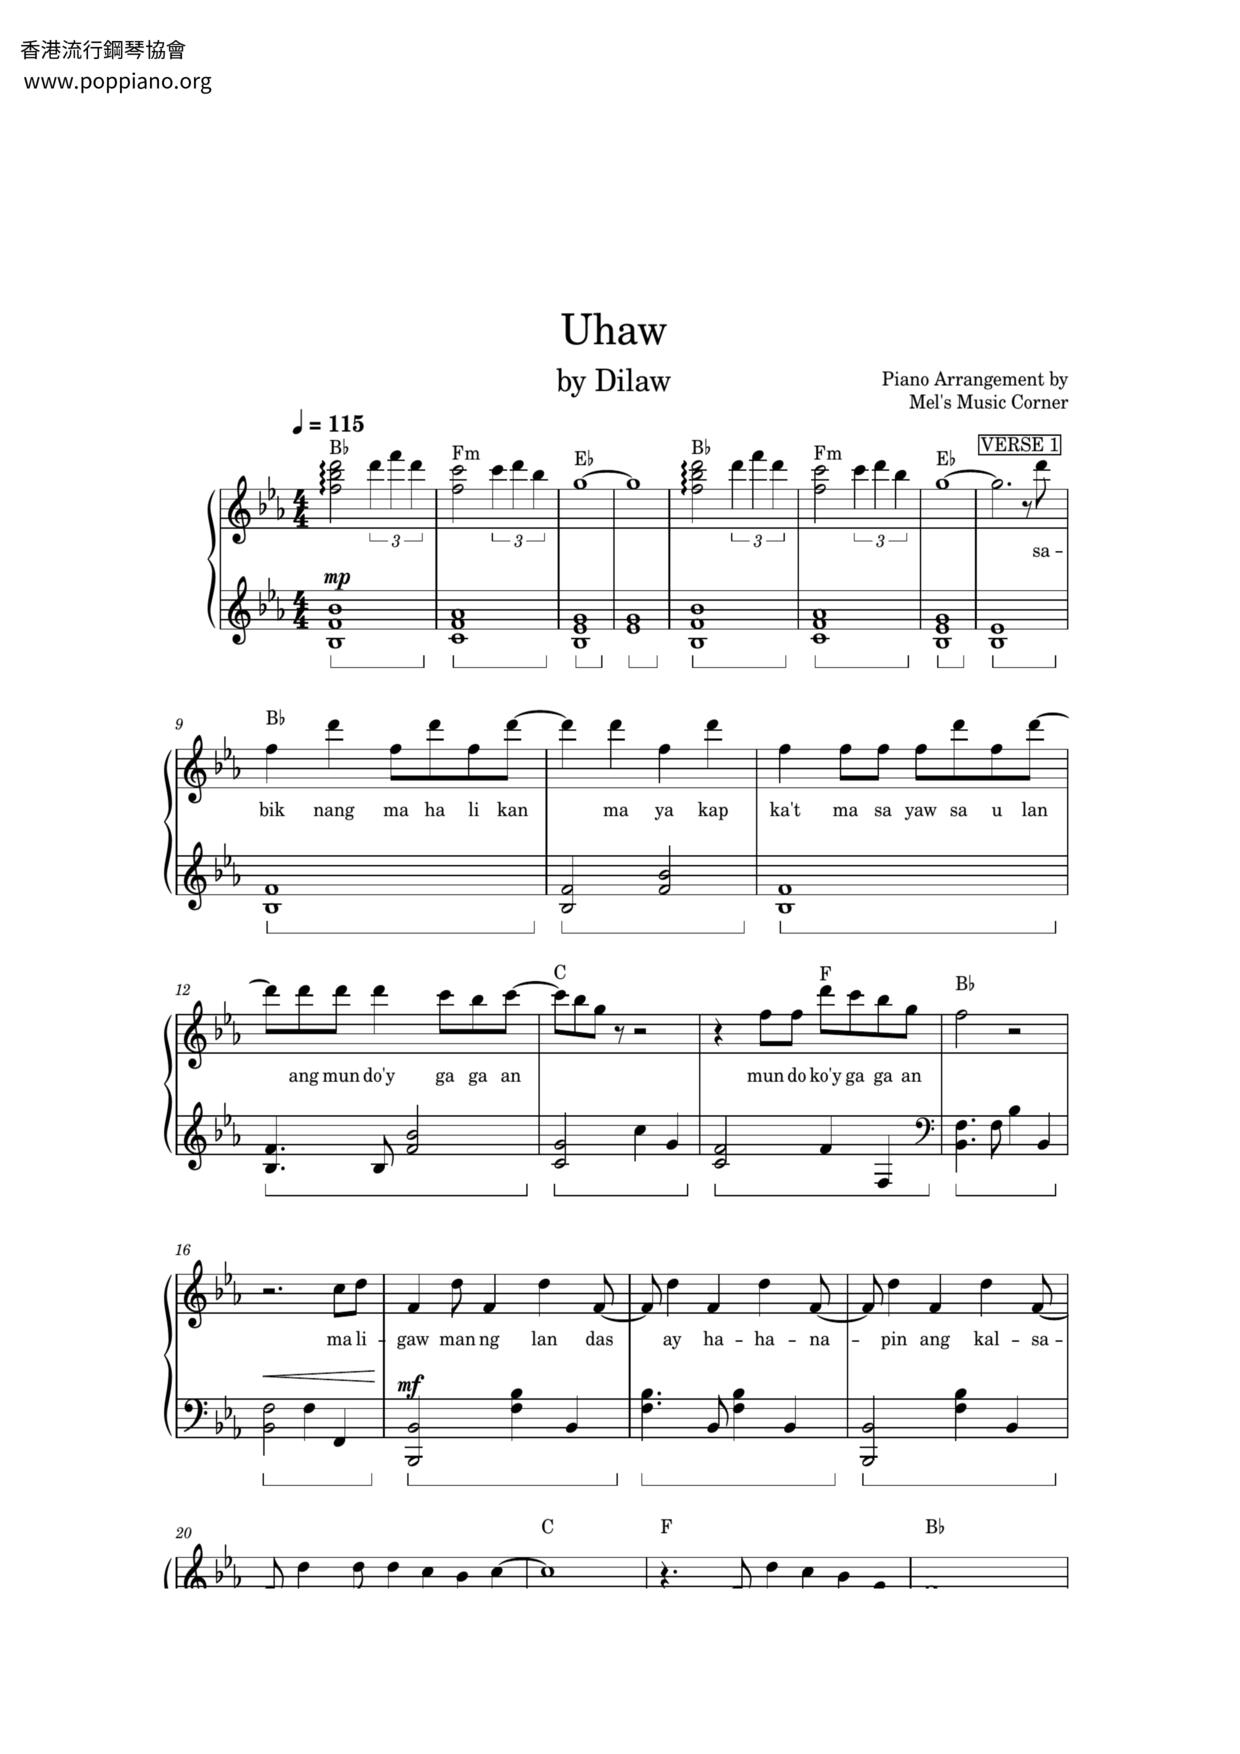 Uhaw Score